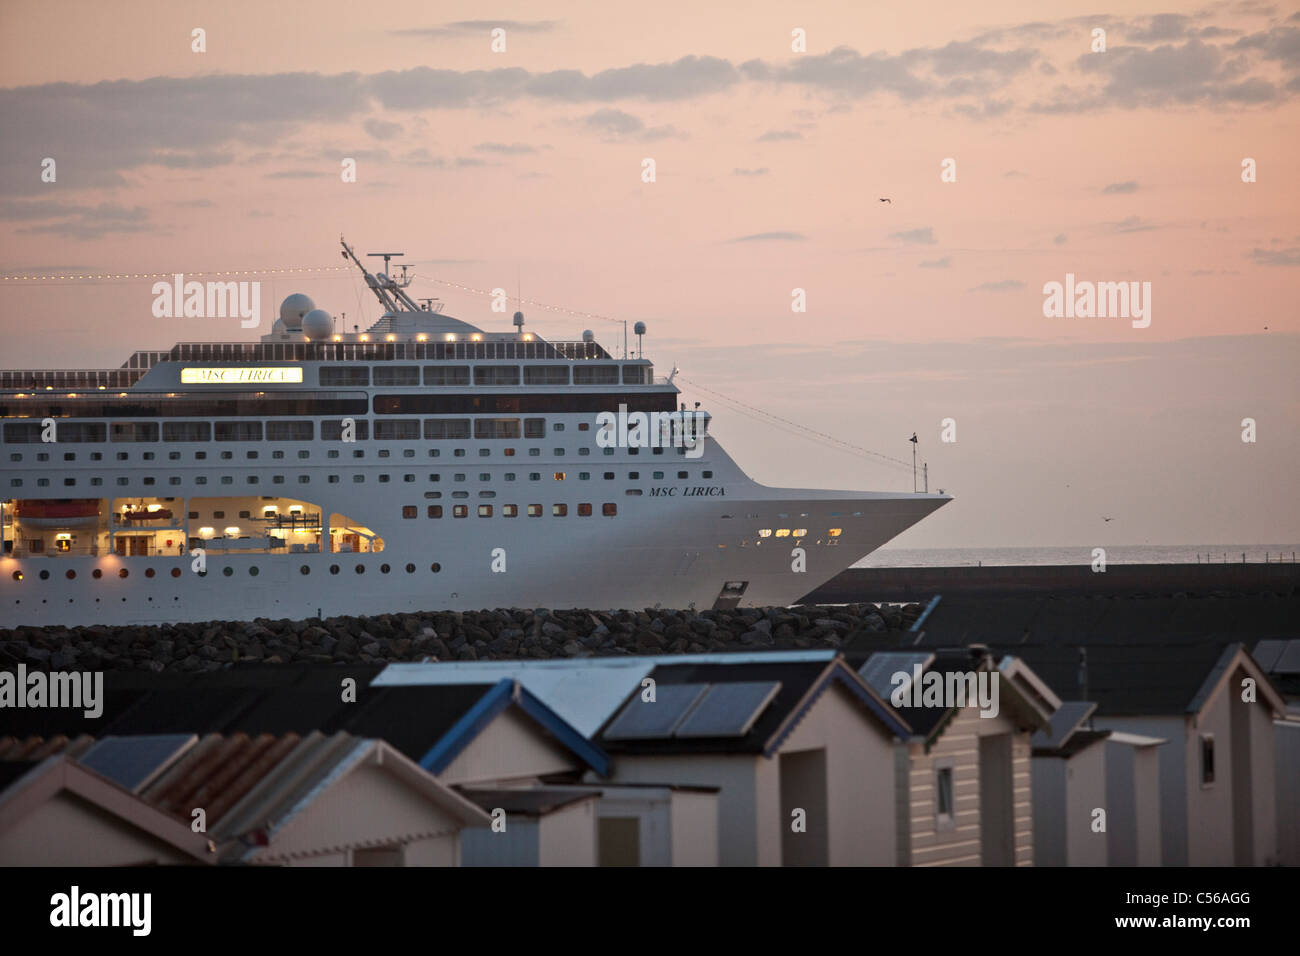 Niederlande, IJmuiden, Kreuzfahrt Schiff, Ankunft am Nordseekanal. Sunrise. Strand Hütten. Stockfoto